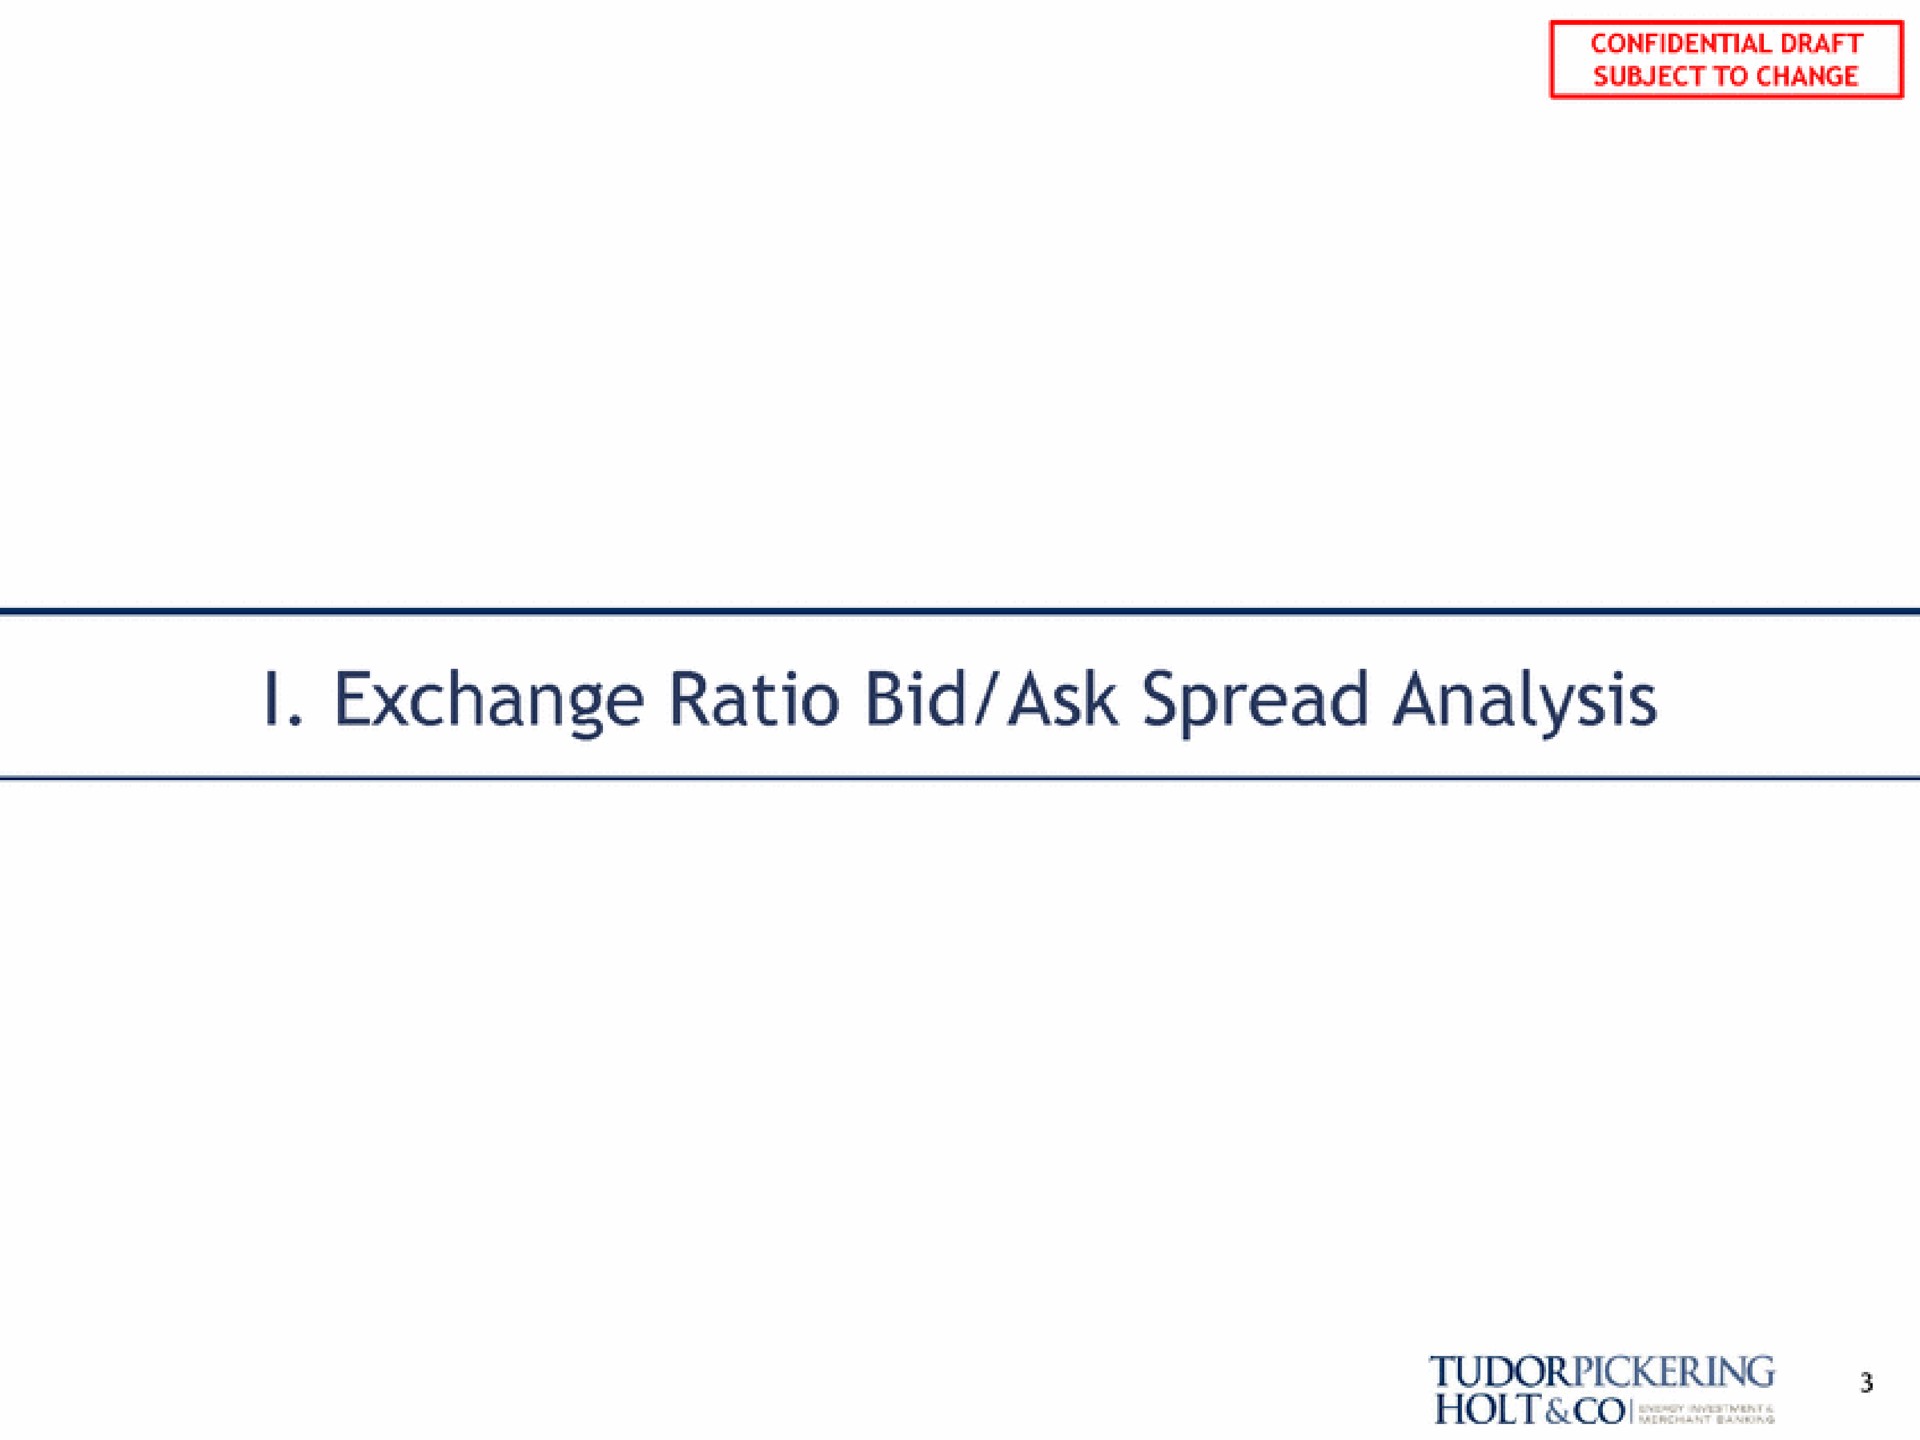 exchange ratio bid ask spread analysis | Tudor, Pickering, Holt & Co